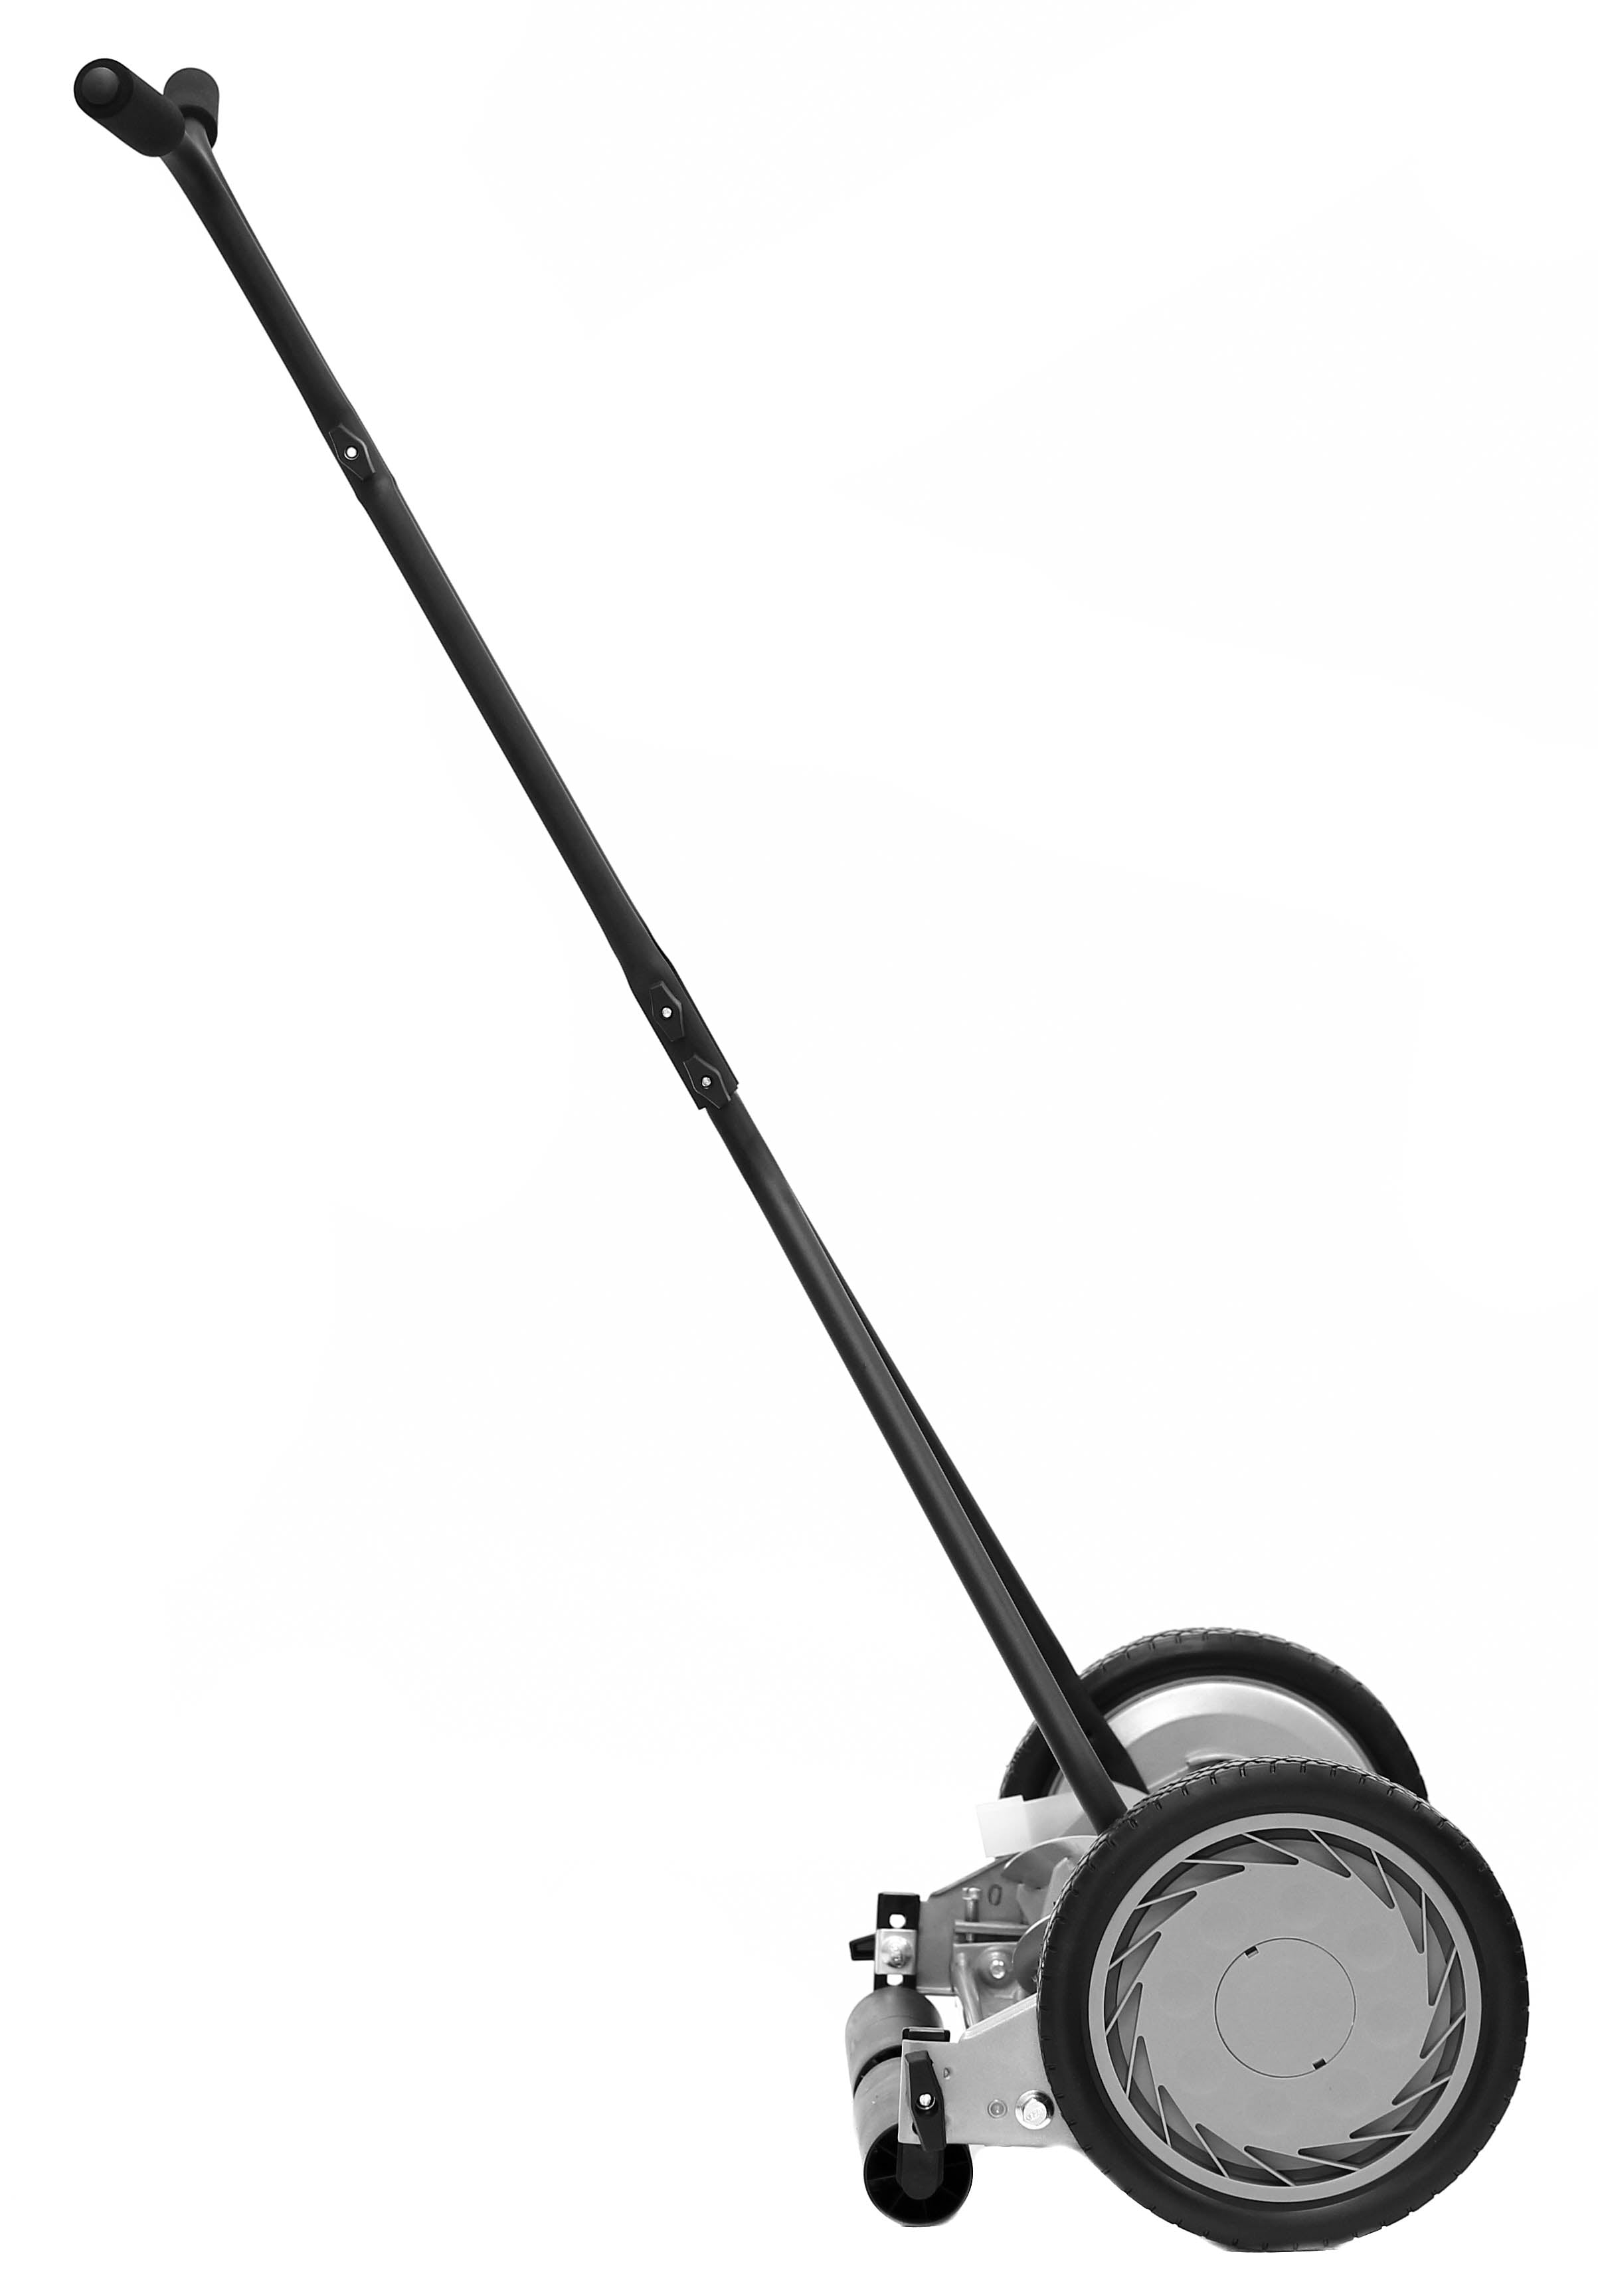 16-Inch Manual Reel Mower W/Adjustable Cutting Height, 6.6-Gallon